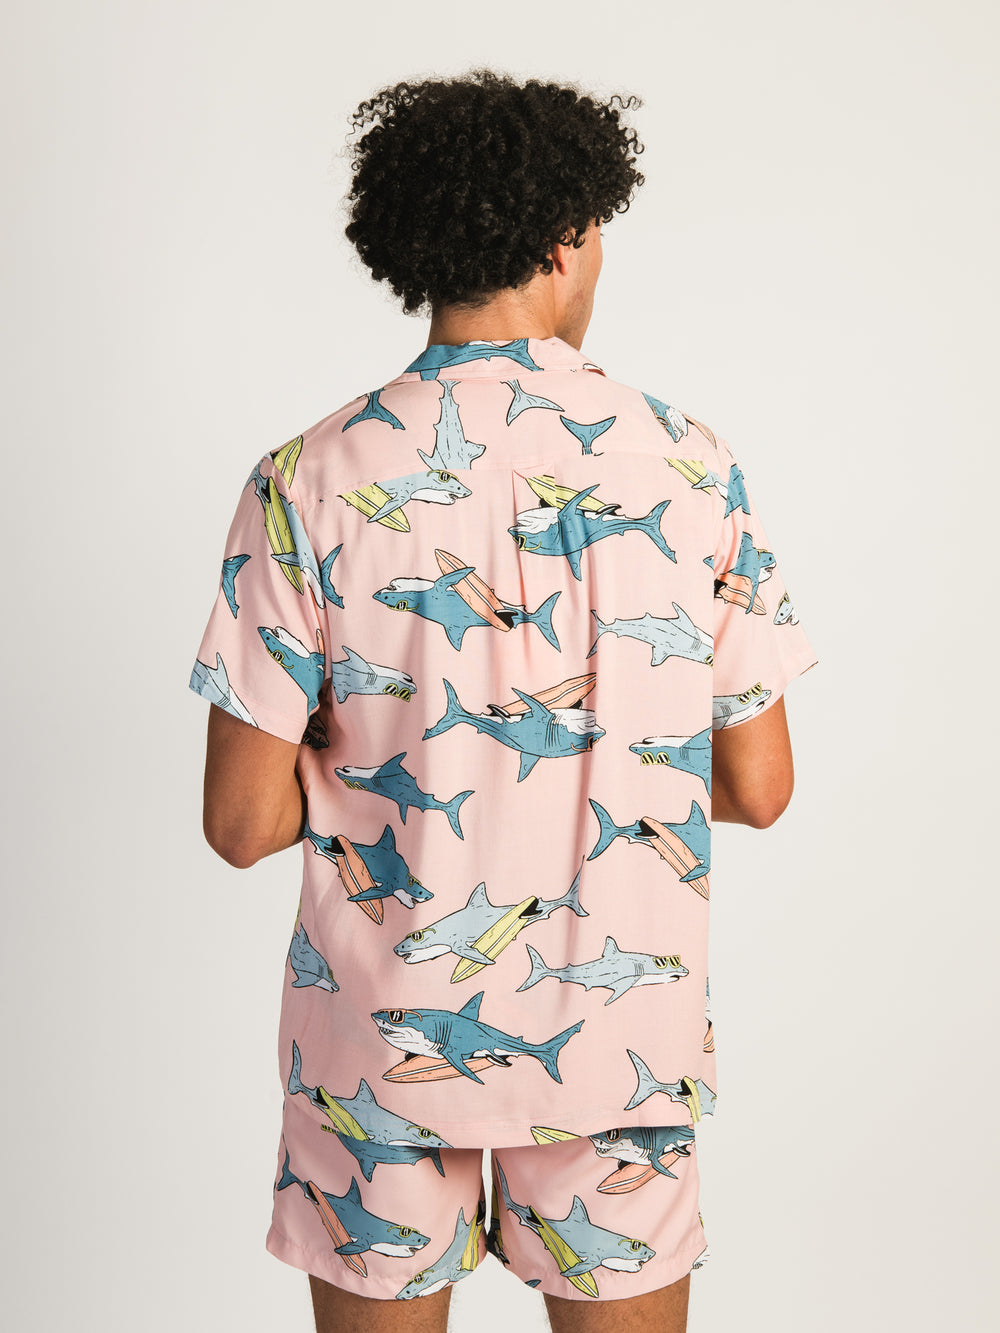 Shirt-Island 2 Island Authentic Aloha Apparel Mens XL Short Sleeve